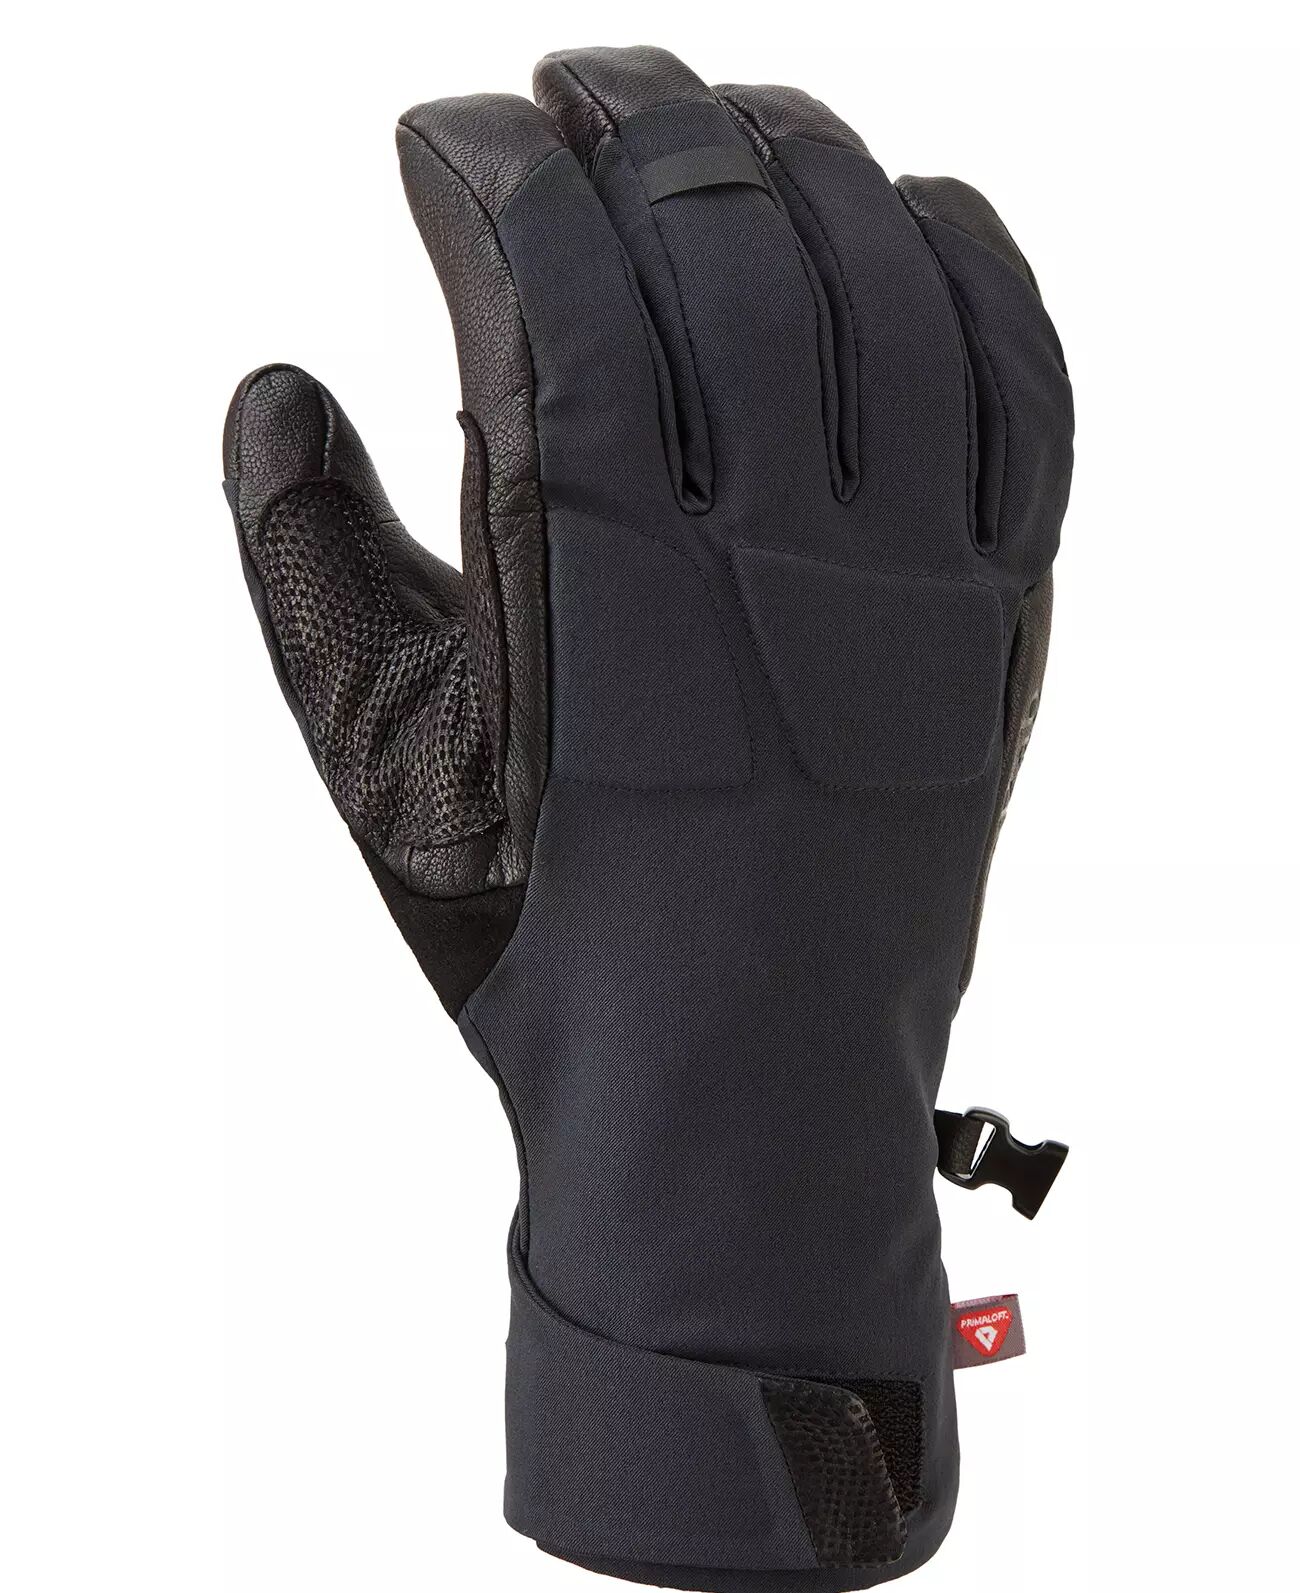 Rab Fulcrum GTX Glove - Handskar - Black - S